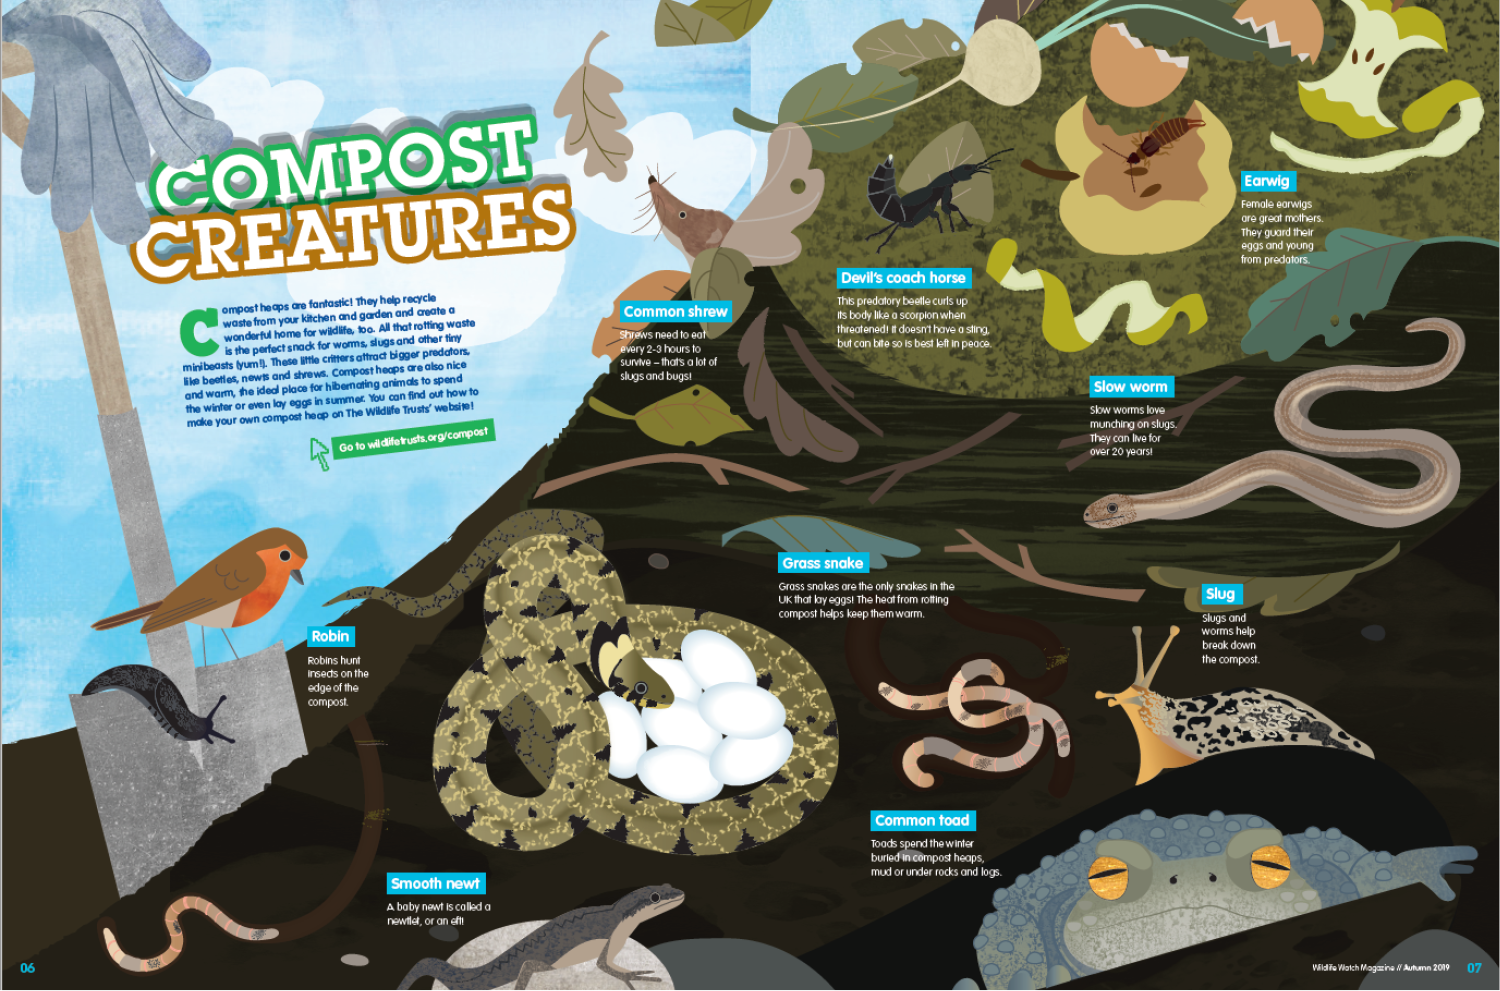 Compost Creatures feature for Wildlife Watch magazine_rachelhudsonillustration.png